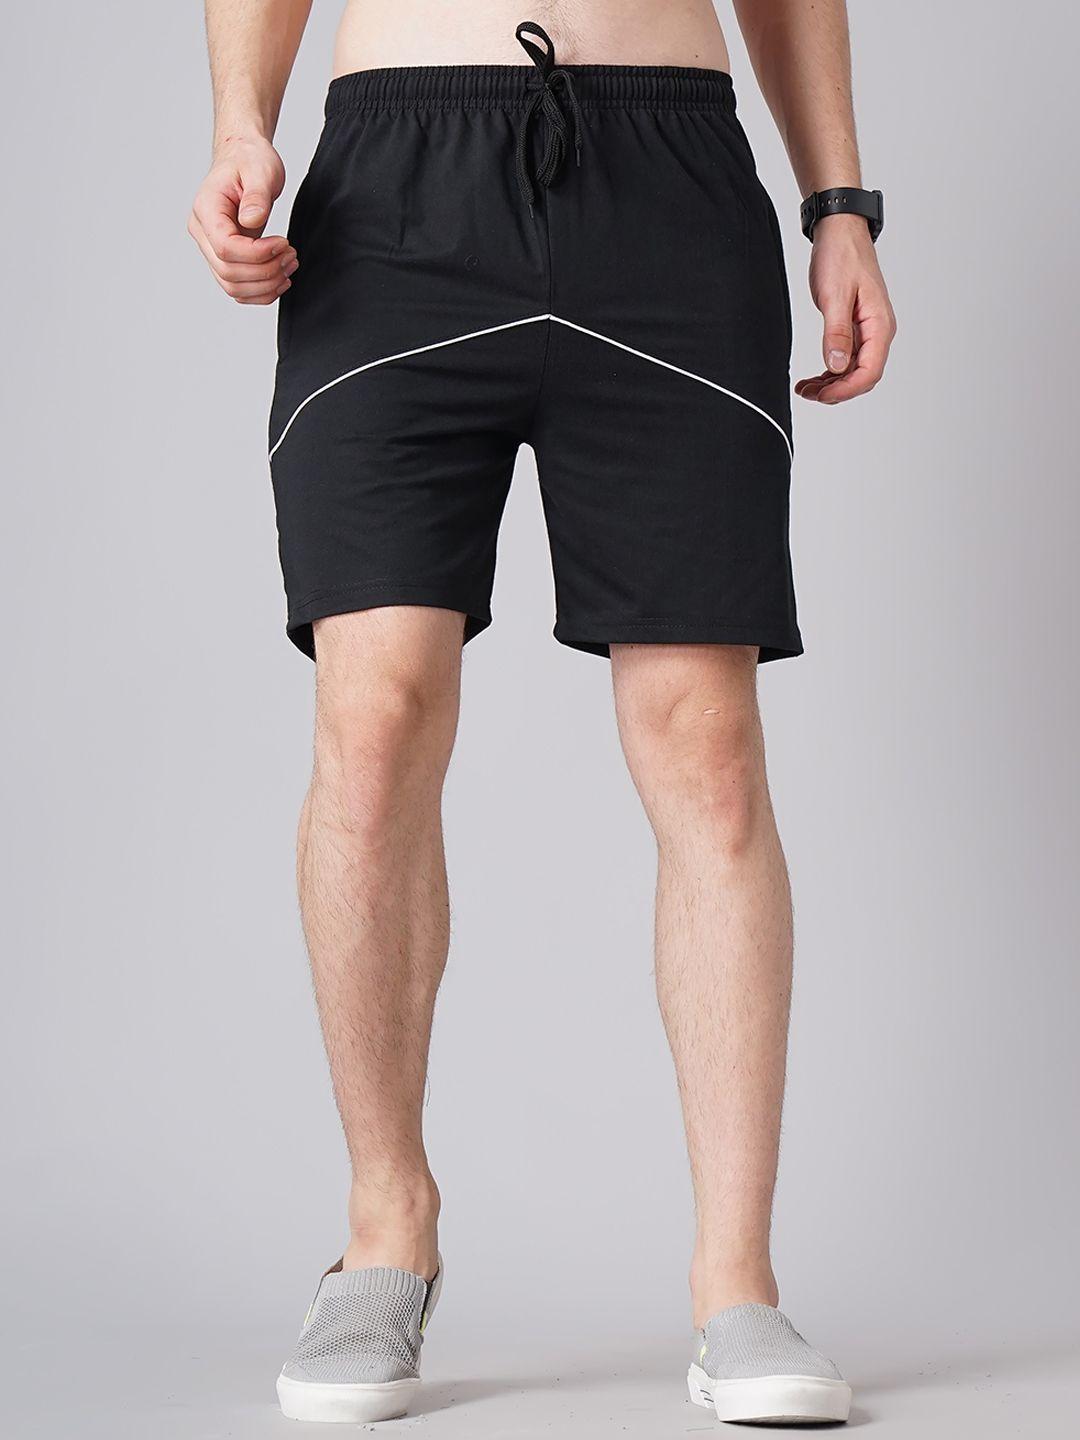 madsto-men-slim-fit-sports-shorts